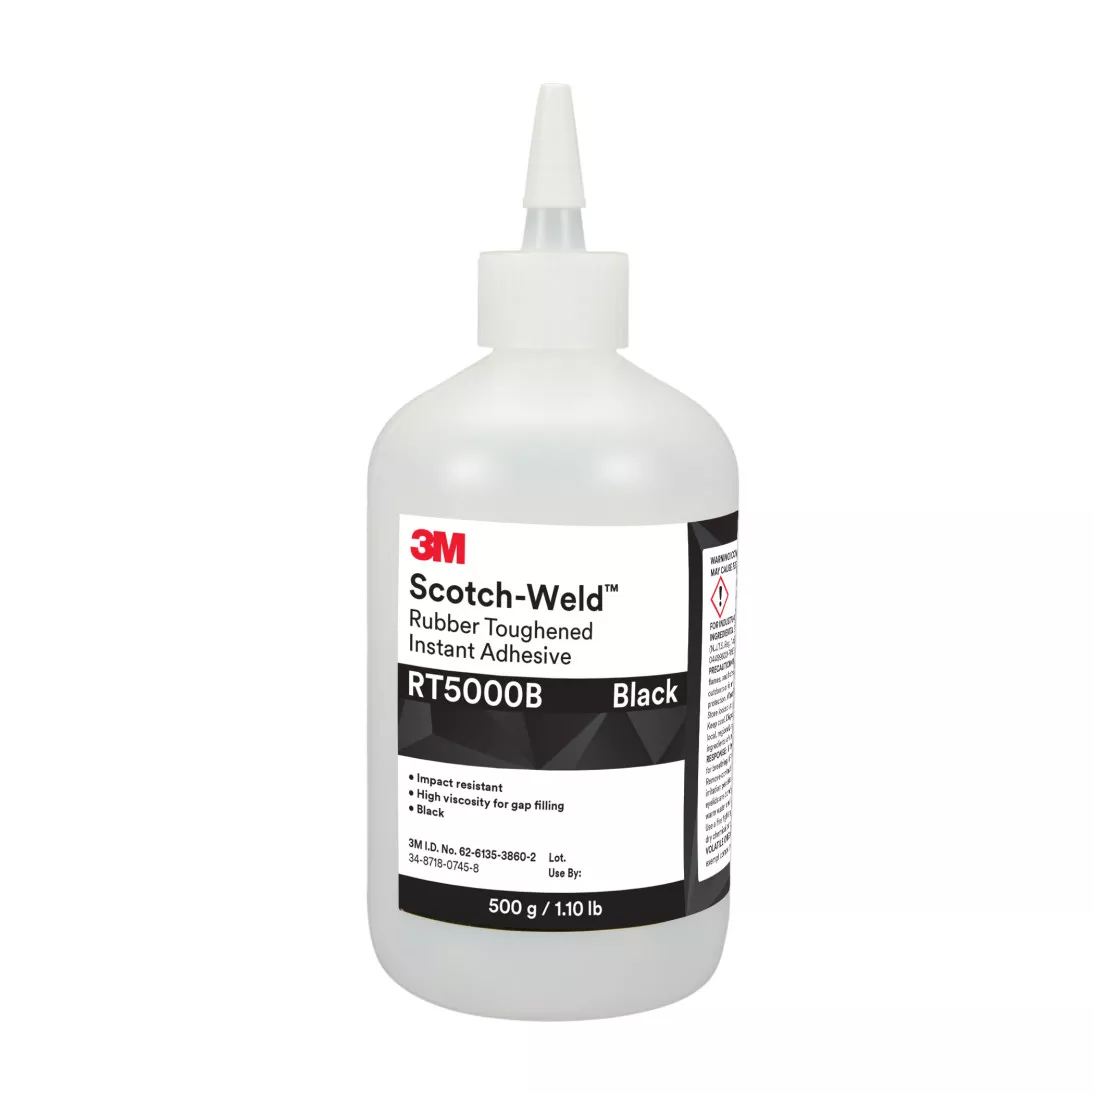 3M™ Scotch-Weld™ Rubber Toughened Instant Adhesive RT5000B, Black, 500
Gram Bottle, 1/case